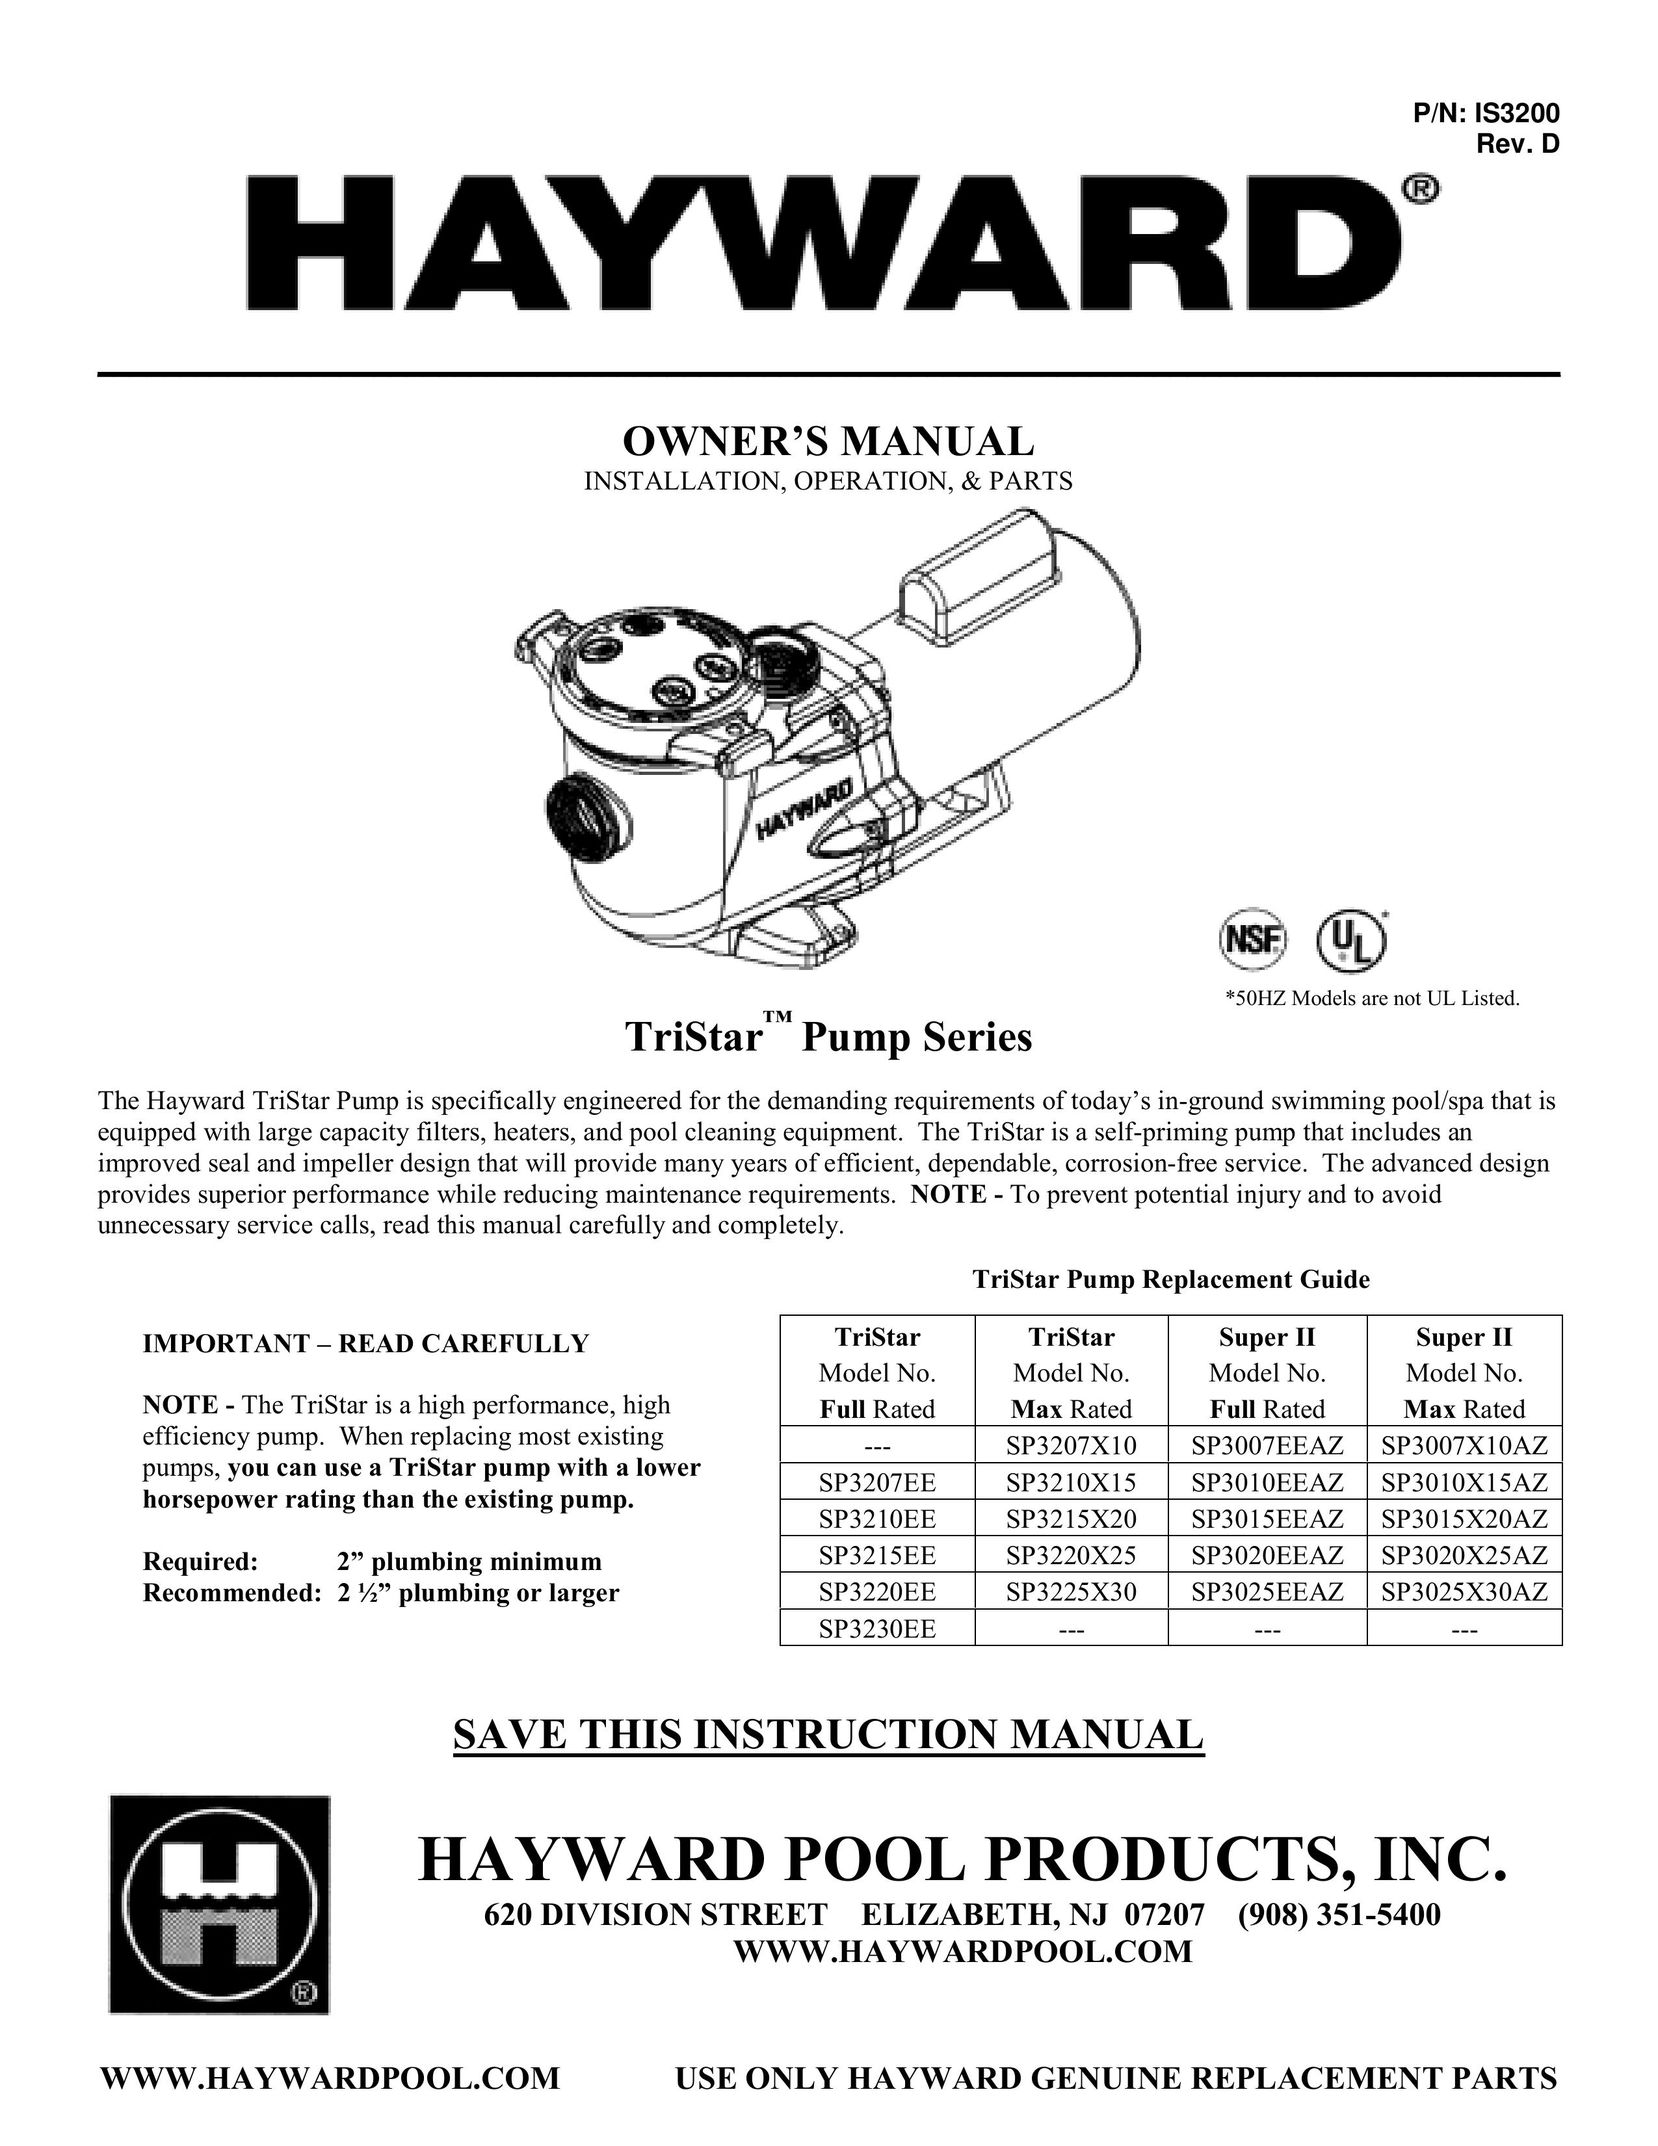 TriStar SP3207EE Heat Pump User Manual